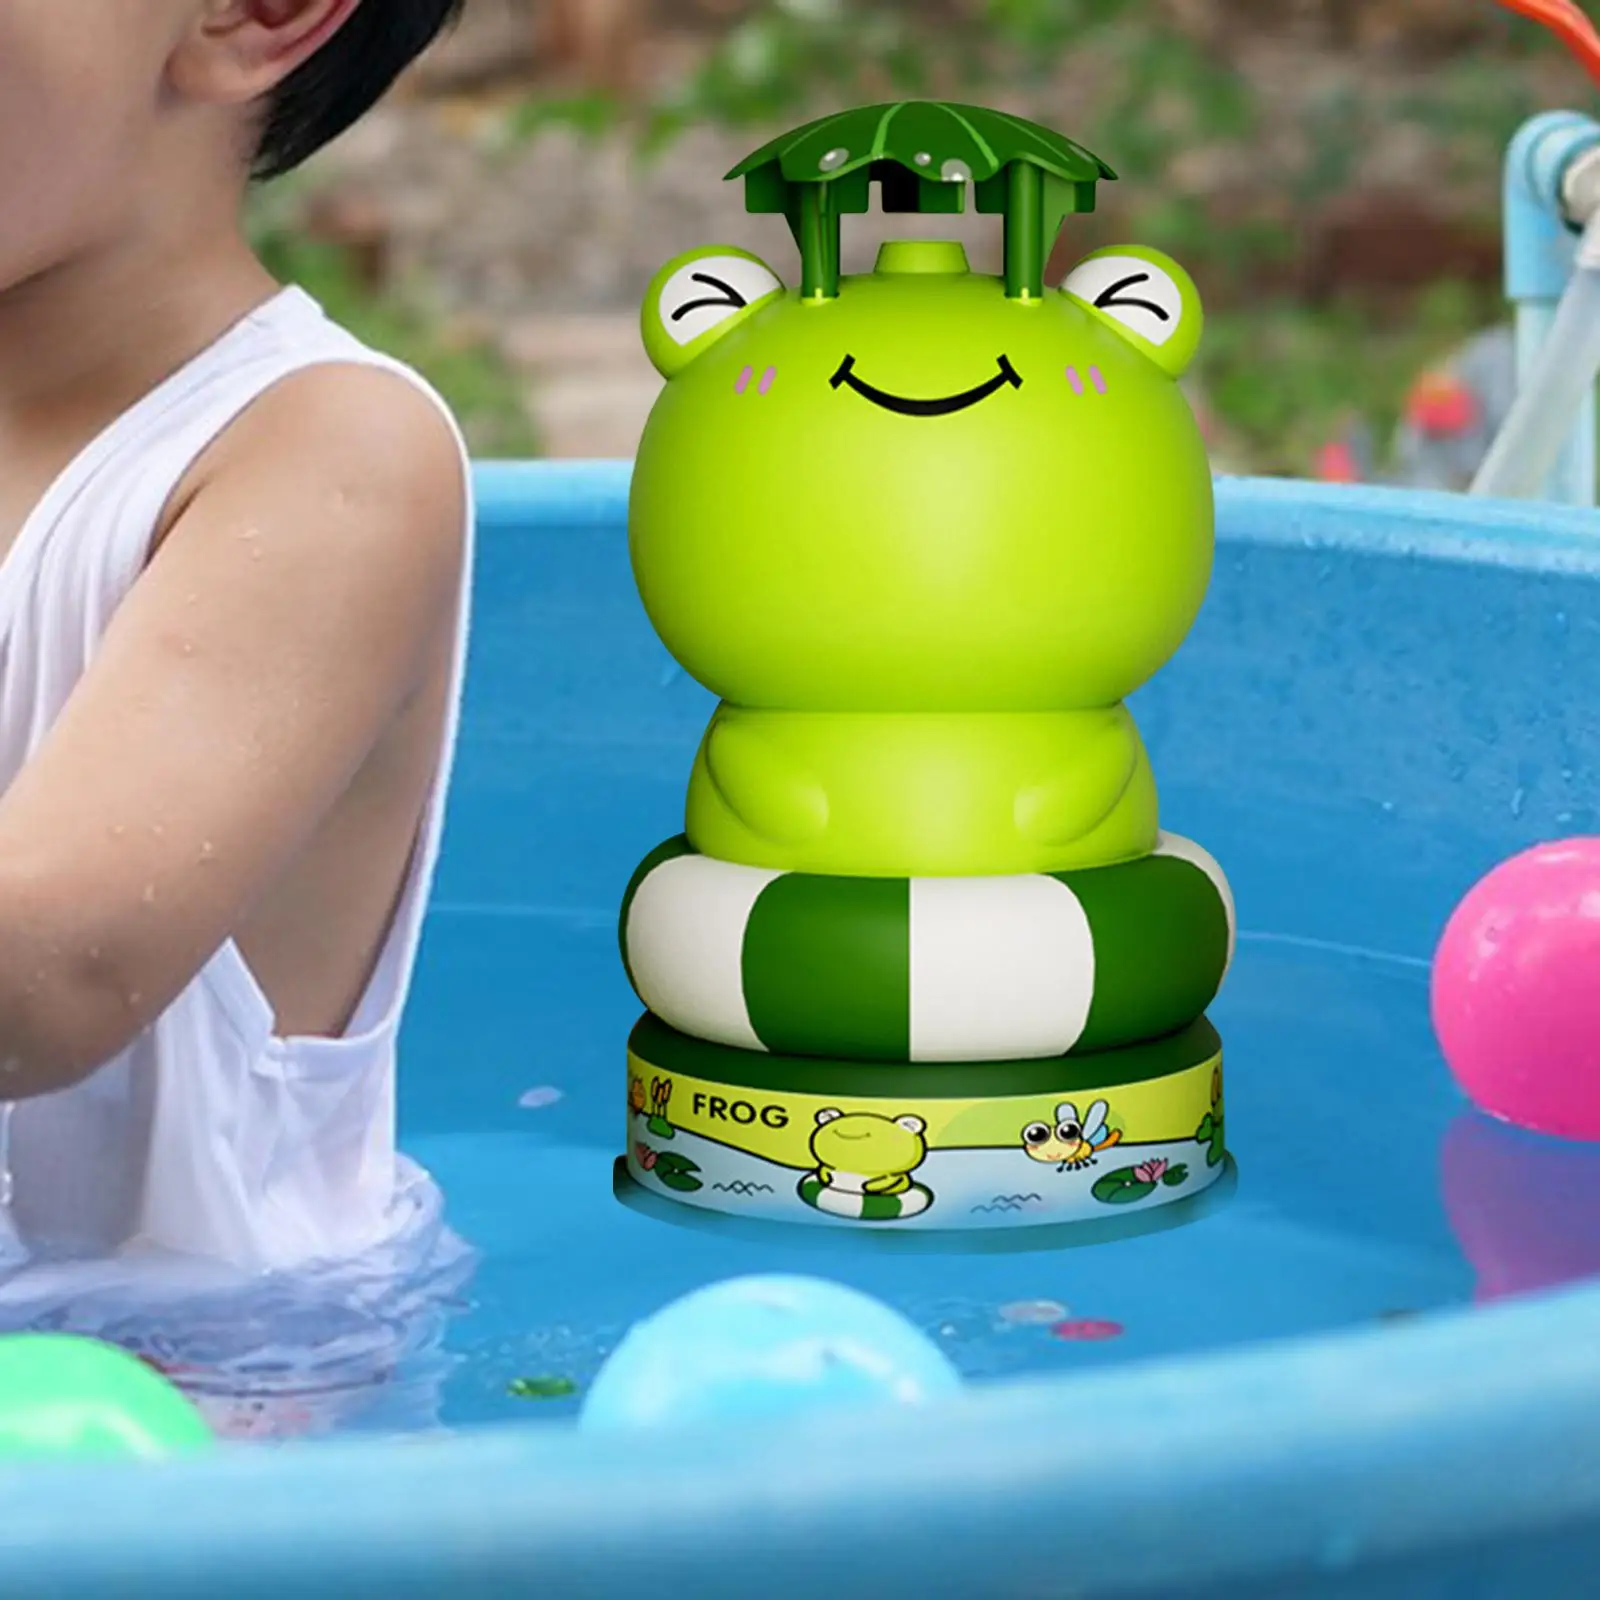 Launcher Sprinkler Toy Games Water Sprayer Toy for Beach Birthday Gift Lawn